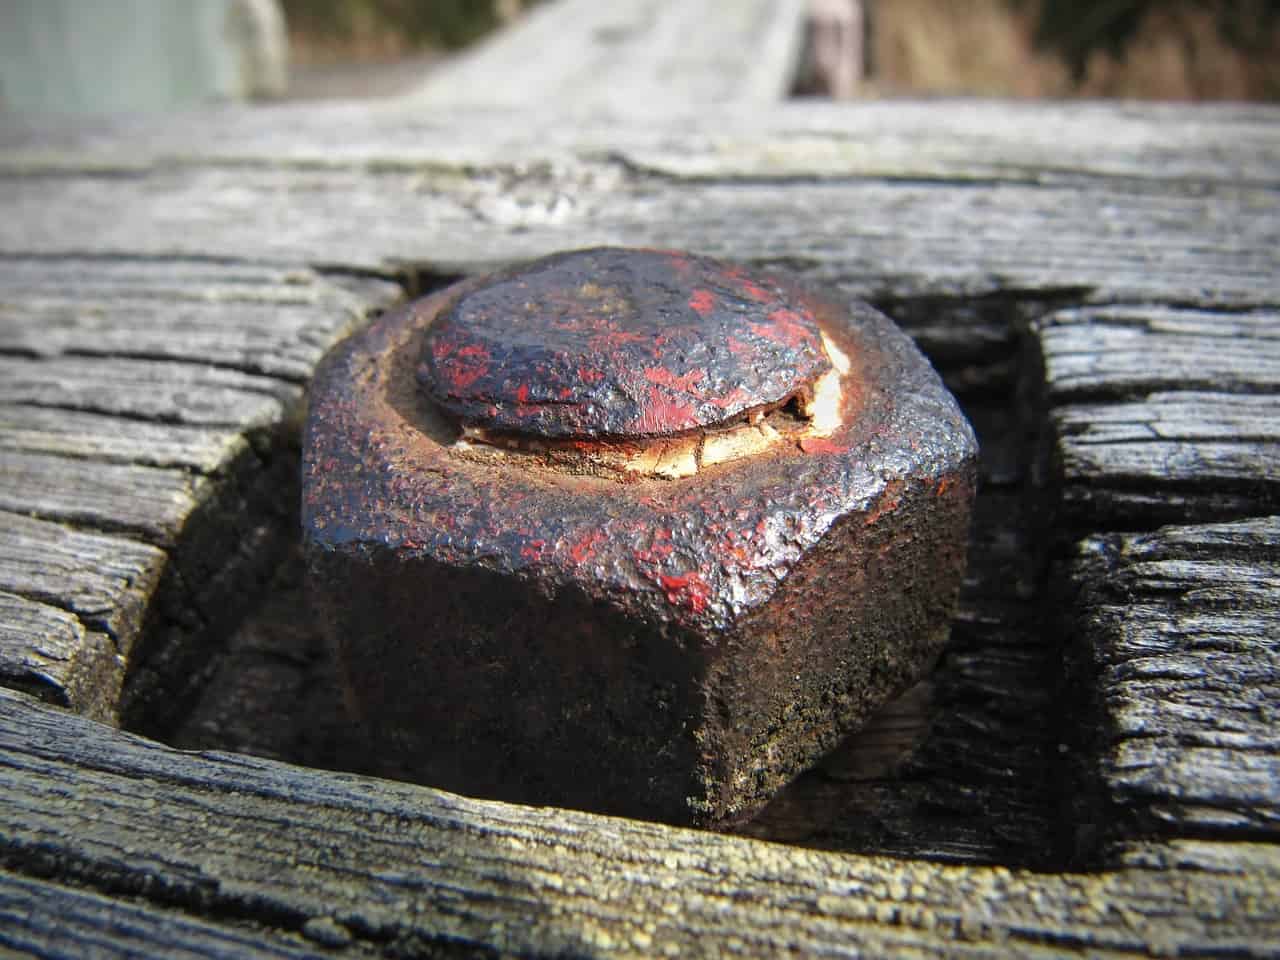 A stuck rusty nut